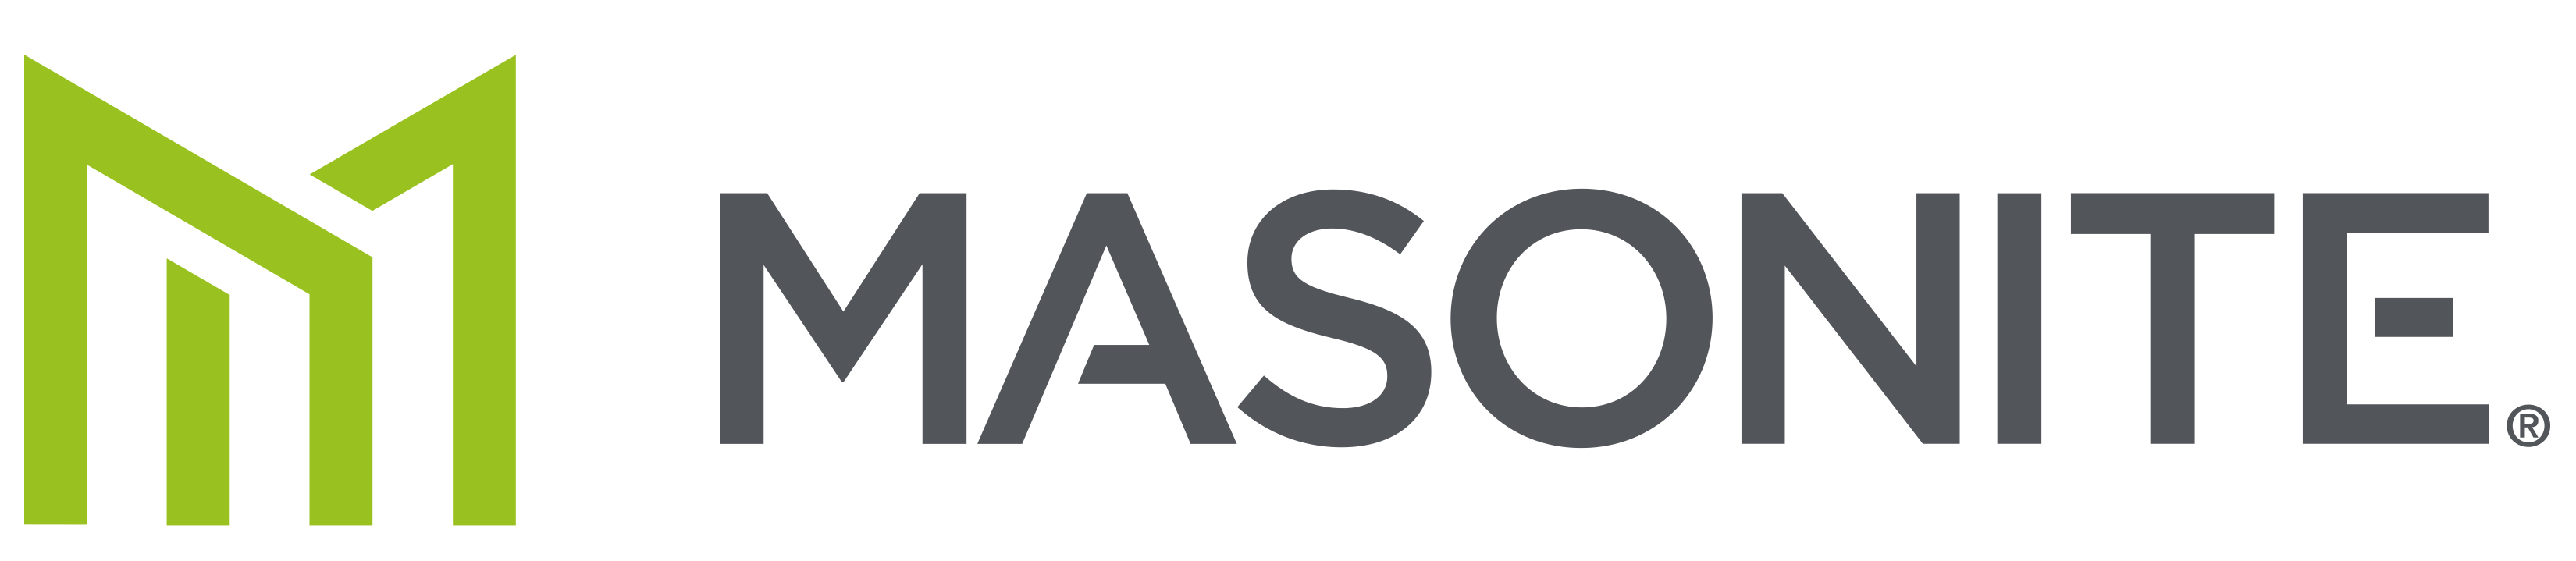 Masonite Corp. logo